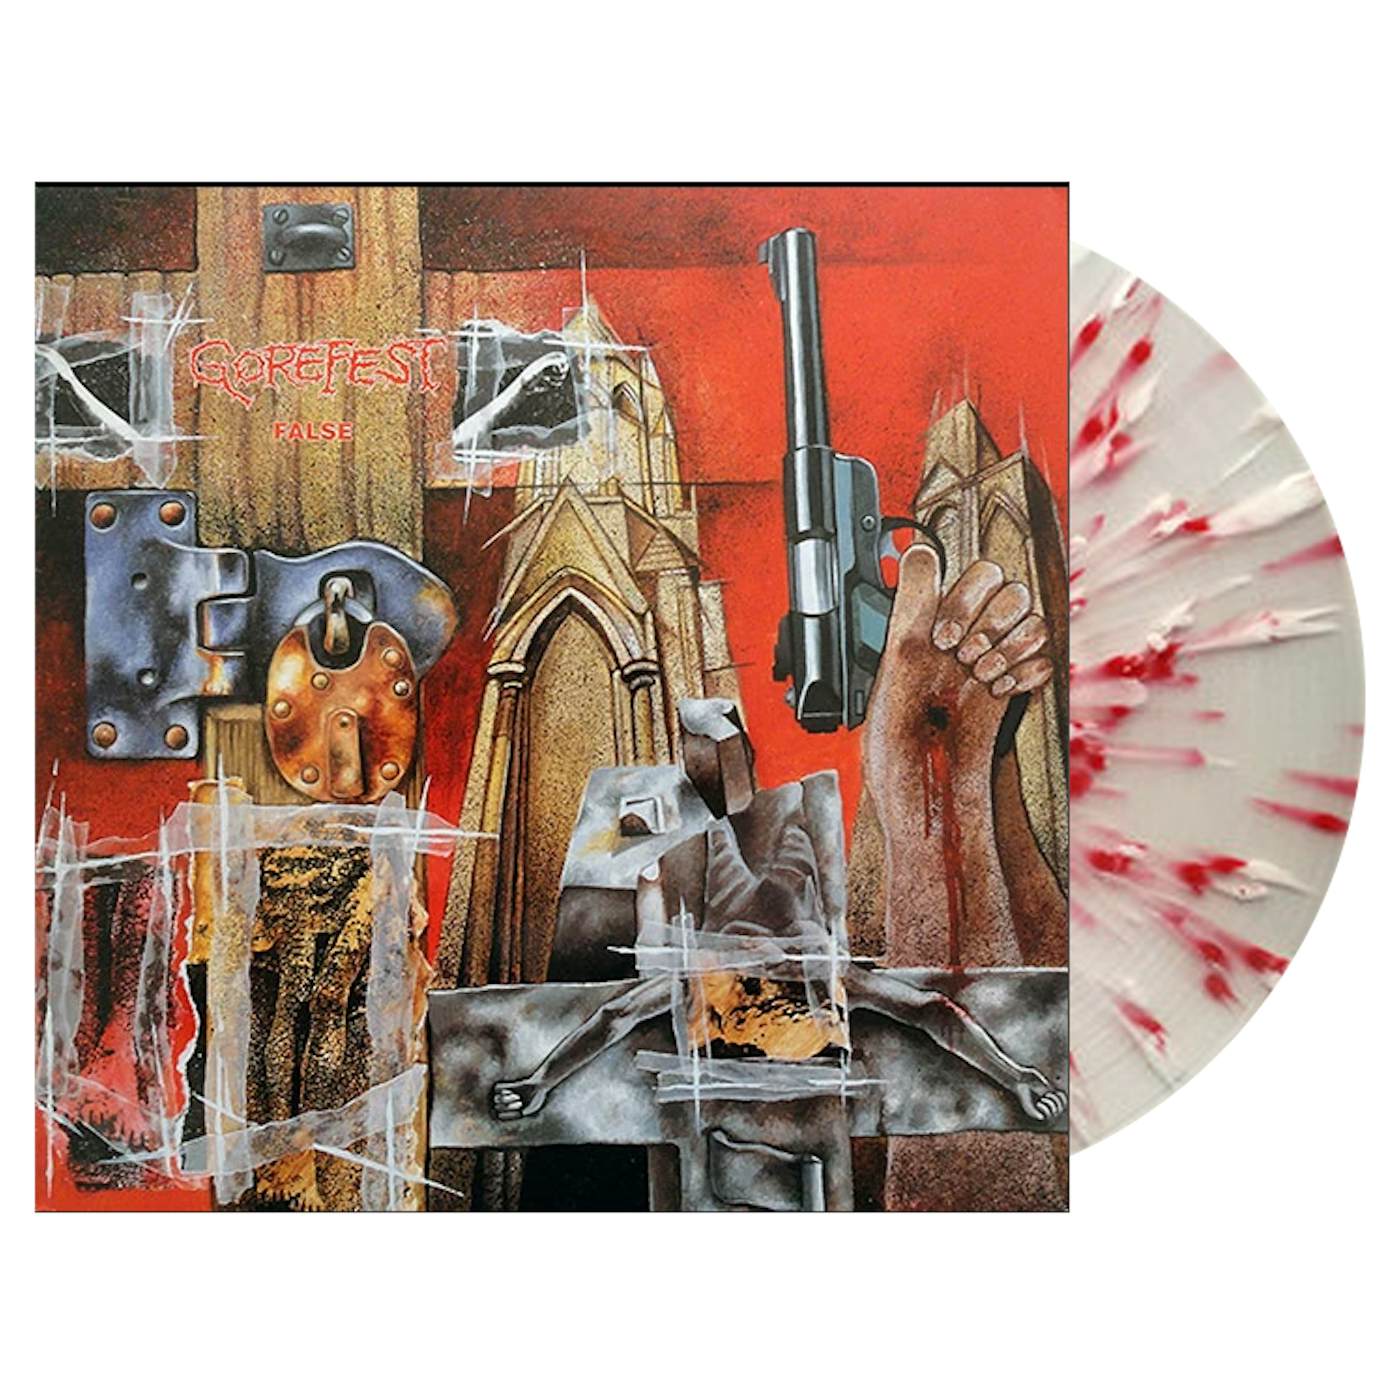 GOREFEST - 'False' LP (Vinyl)